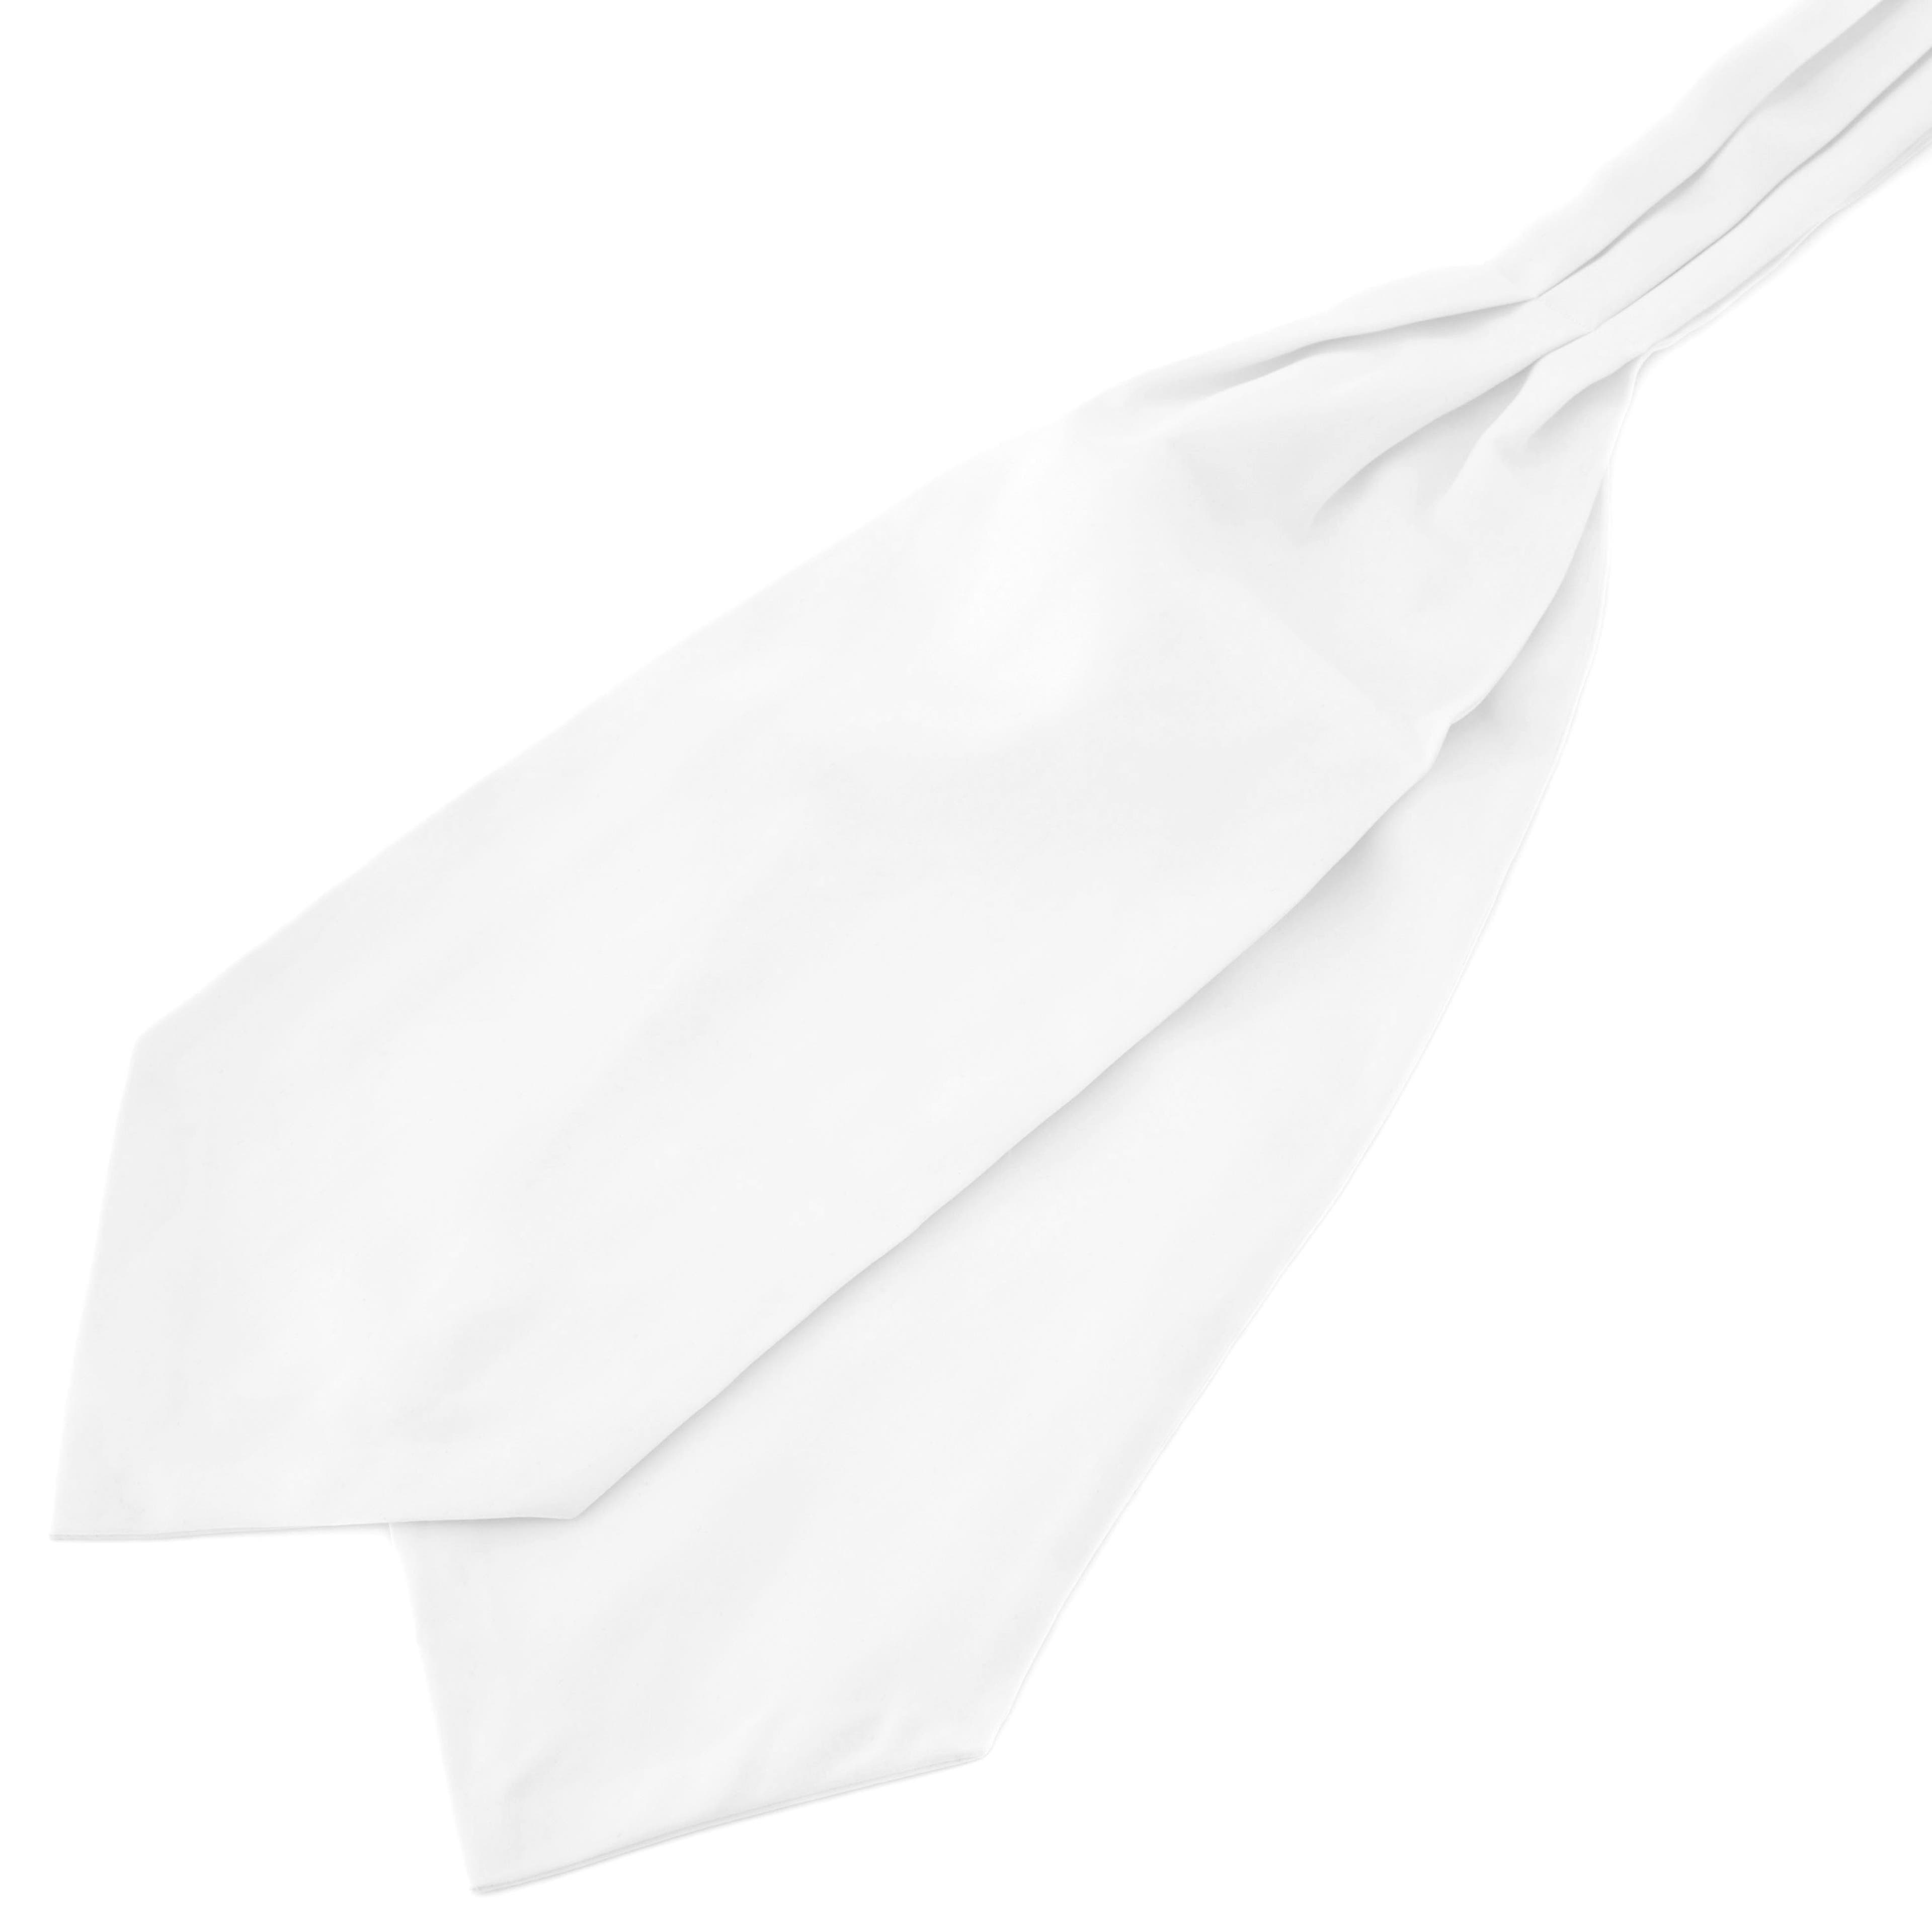 Cravate blanche classique